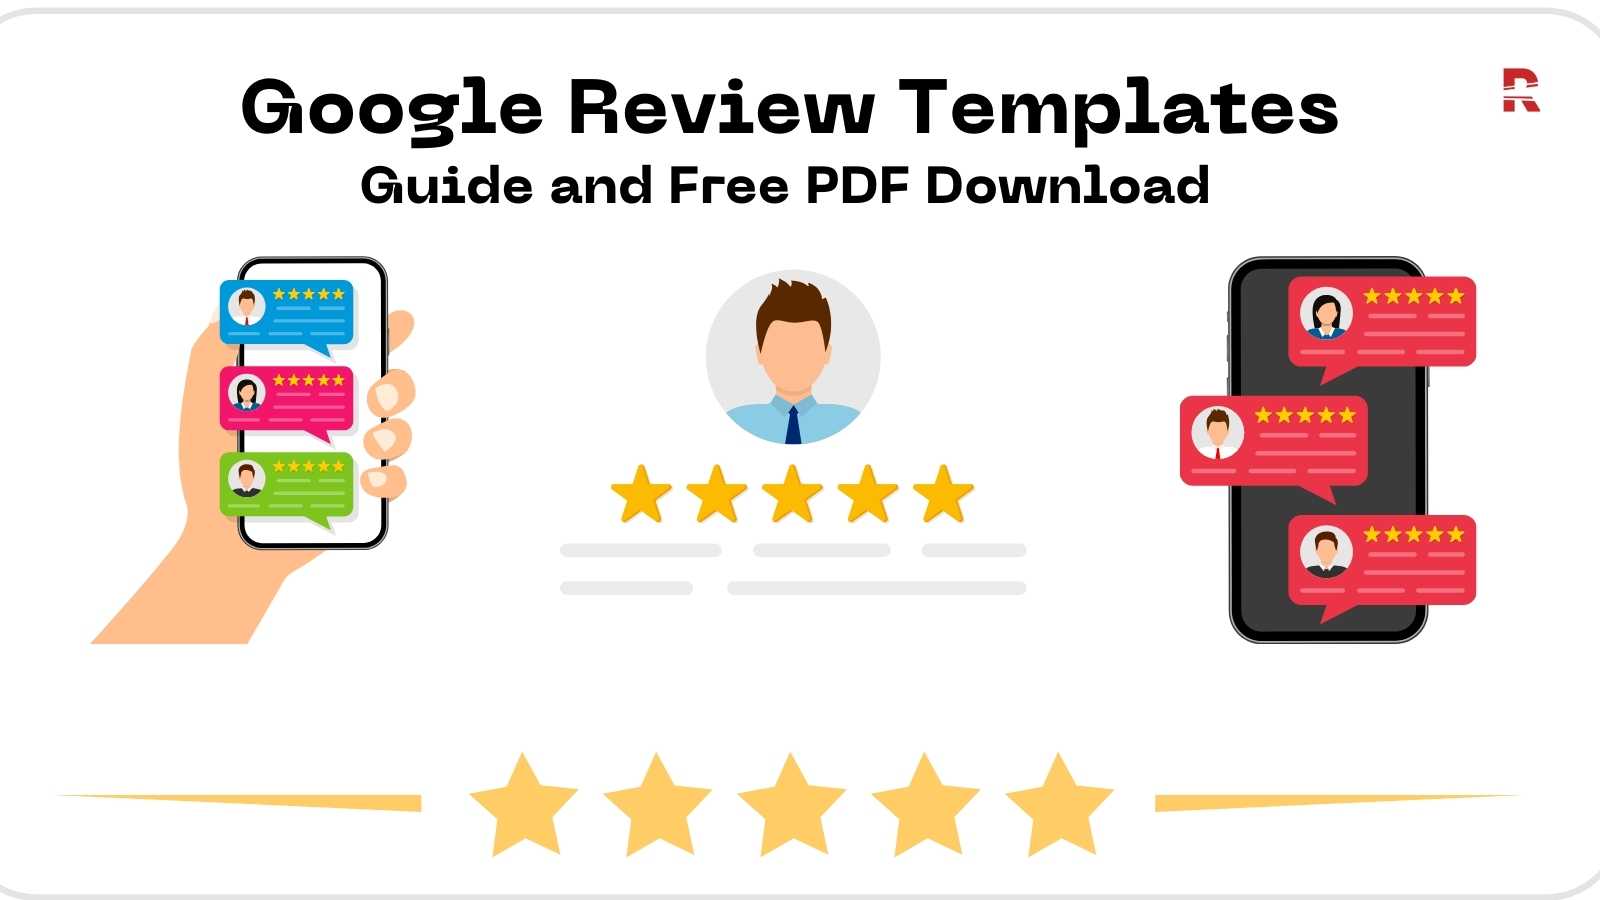 Full Google Reviews template guide